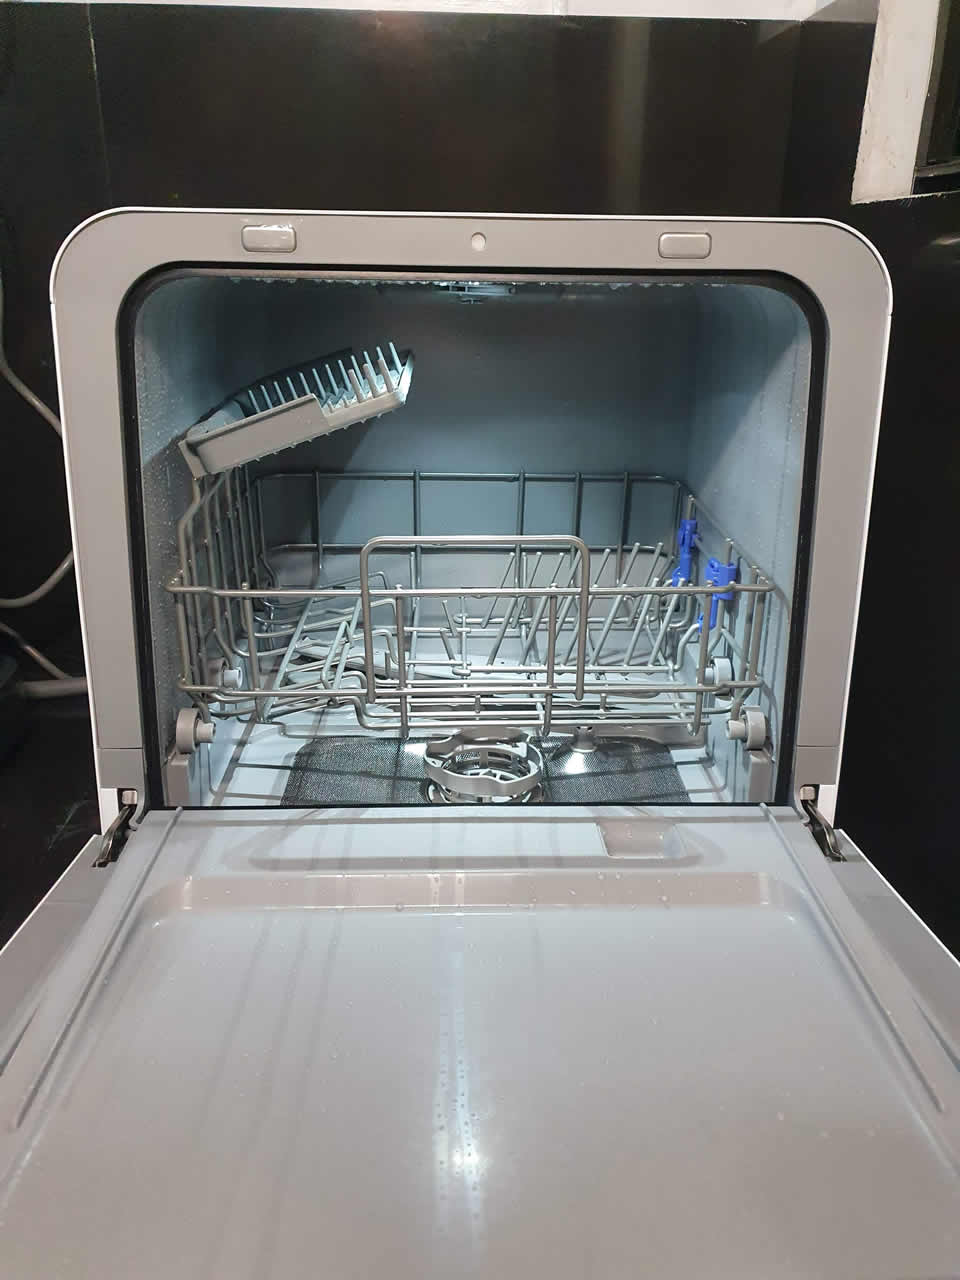 Maximus mini table top dishwasher